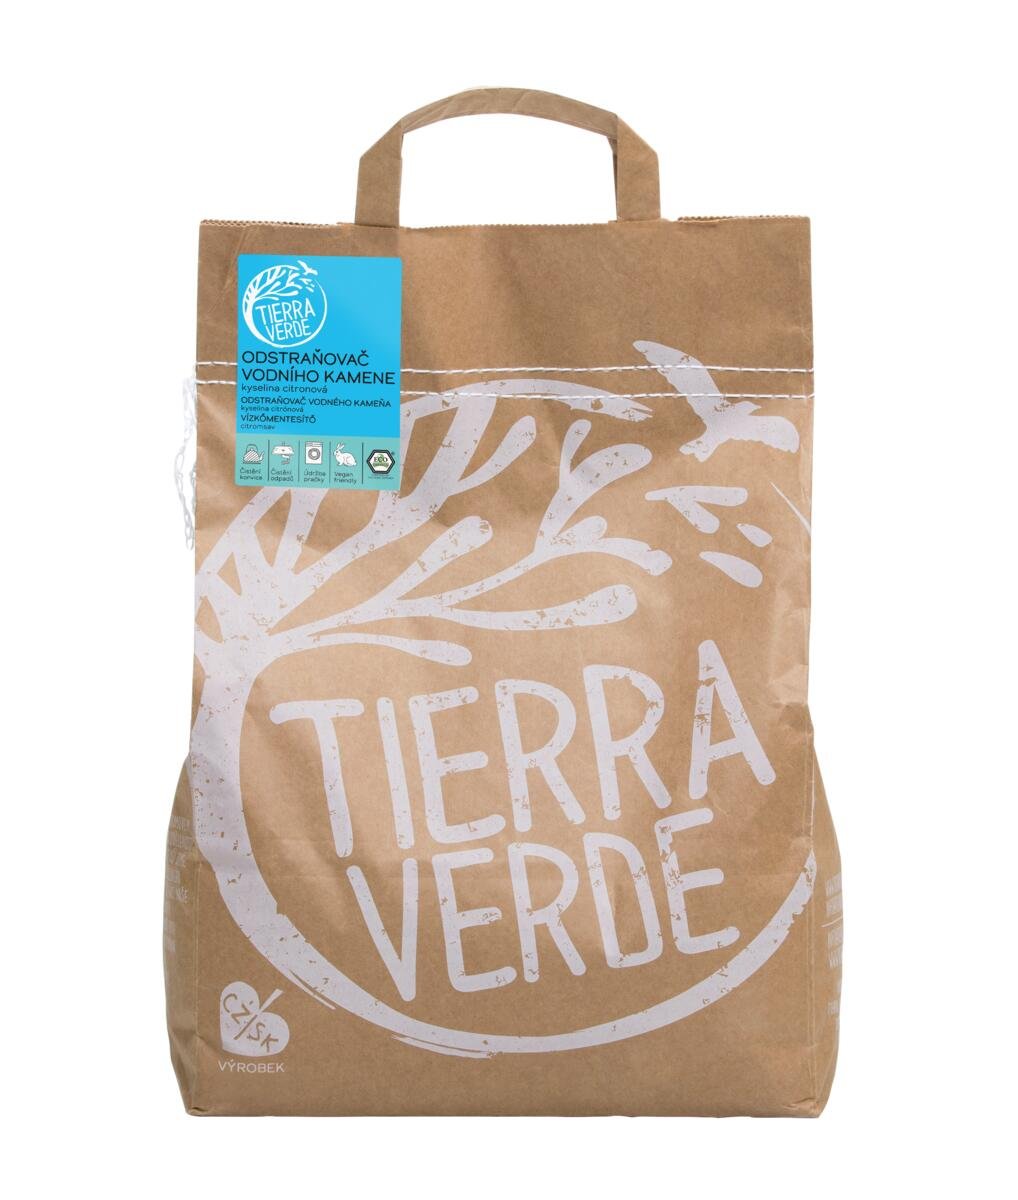 Tierra Verde Odstraňovač vodního kamene 5 kg - koncentrovaný a vysoce účinný Tierra Verde